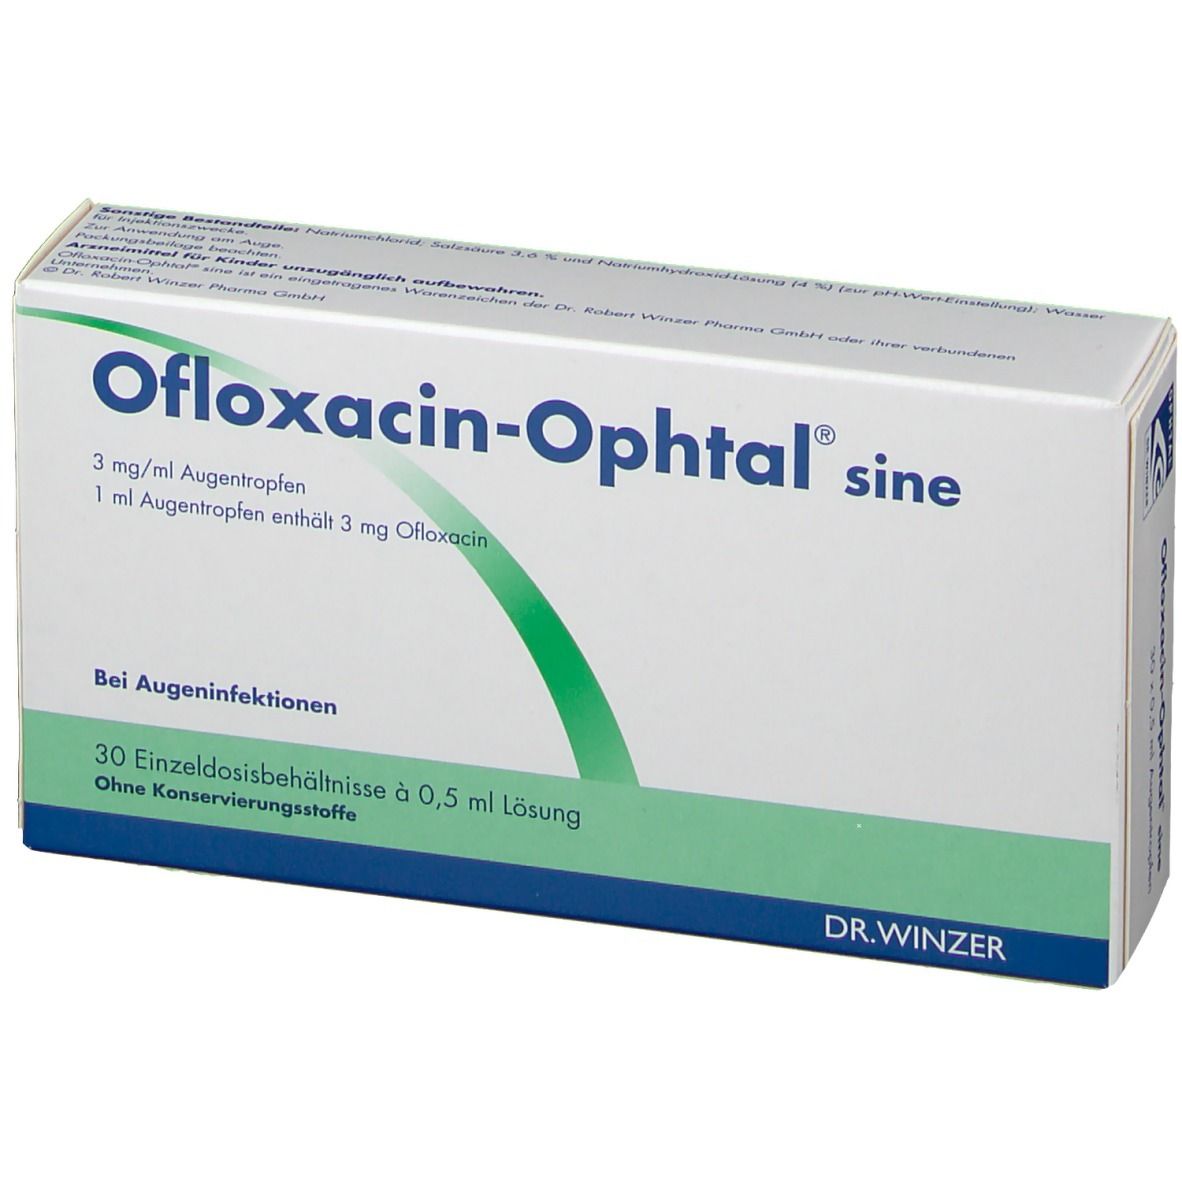 Ofloxacin-Ophtal® sine 3 mg/ml